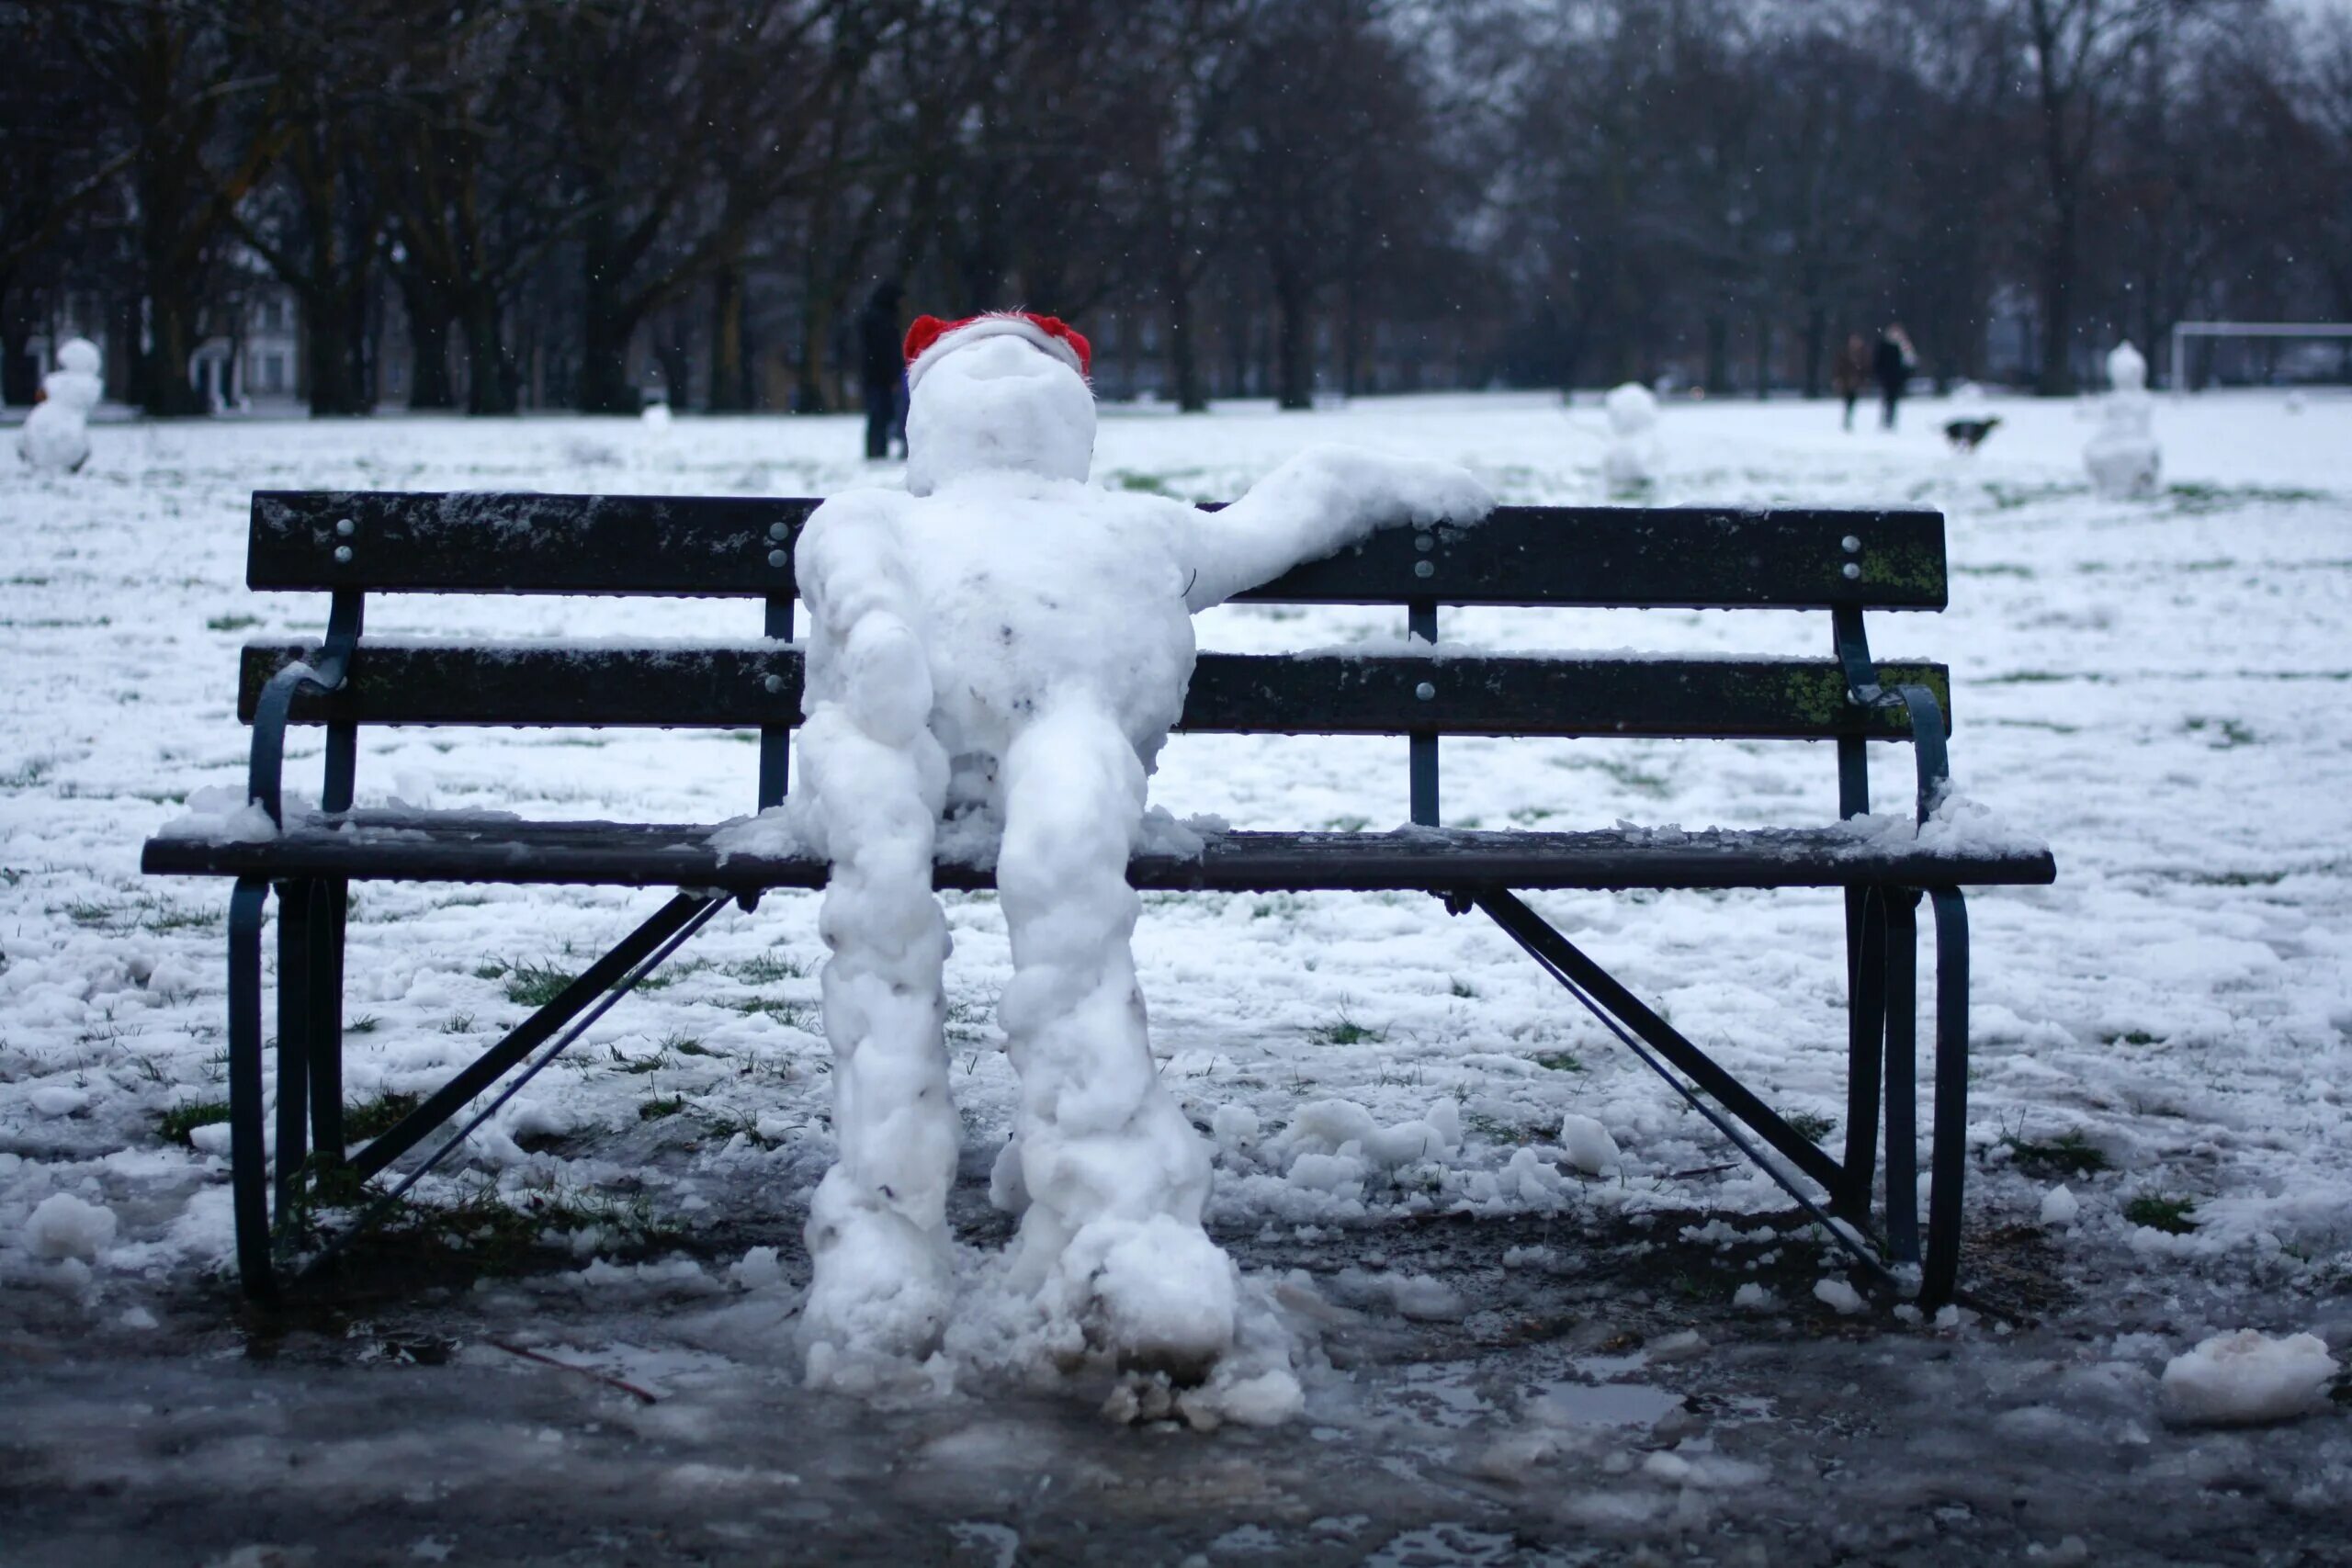 Сильный холод 5. Снеговик на скамейке. Снеговик фото. Мокрый снег. Снеговики на скамейке фото.